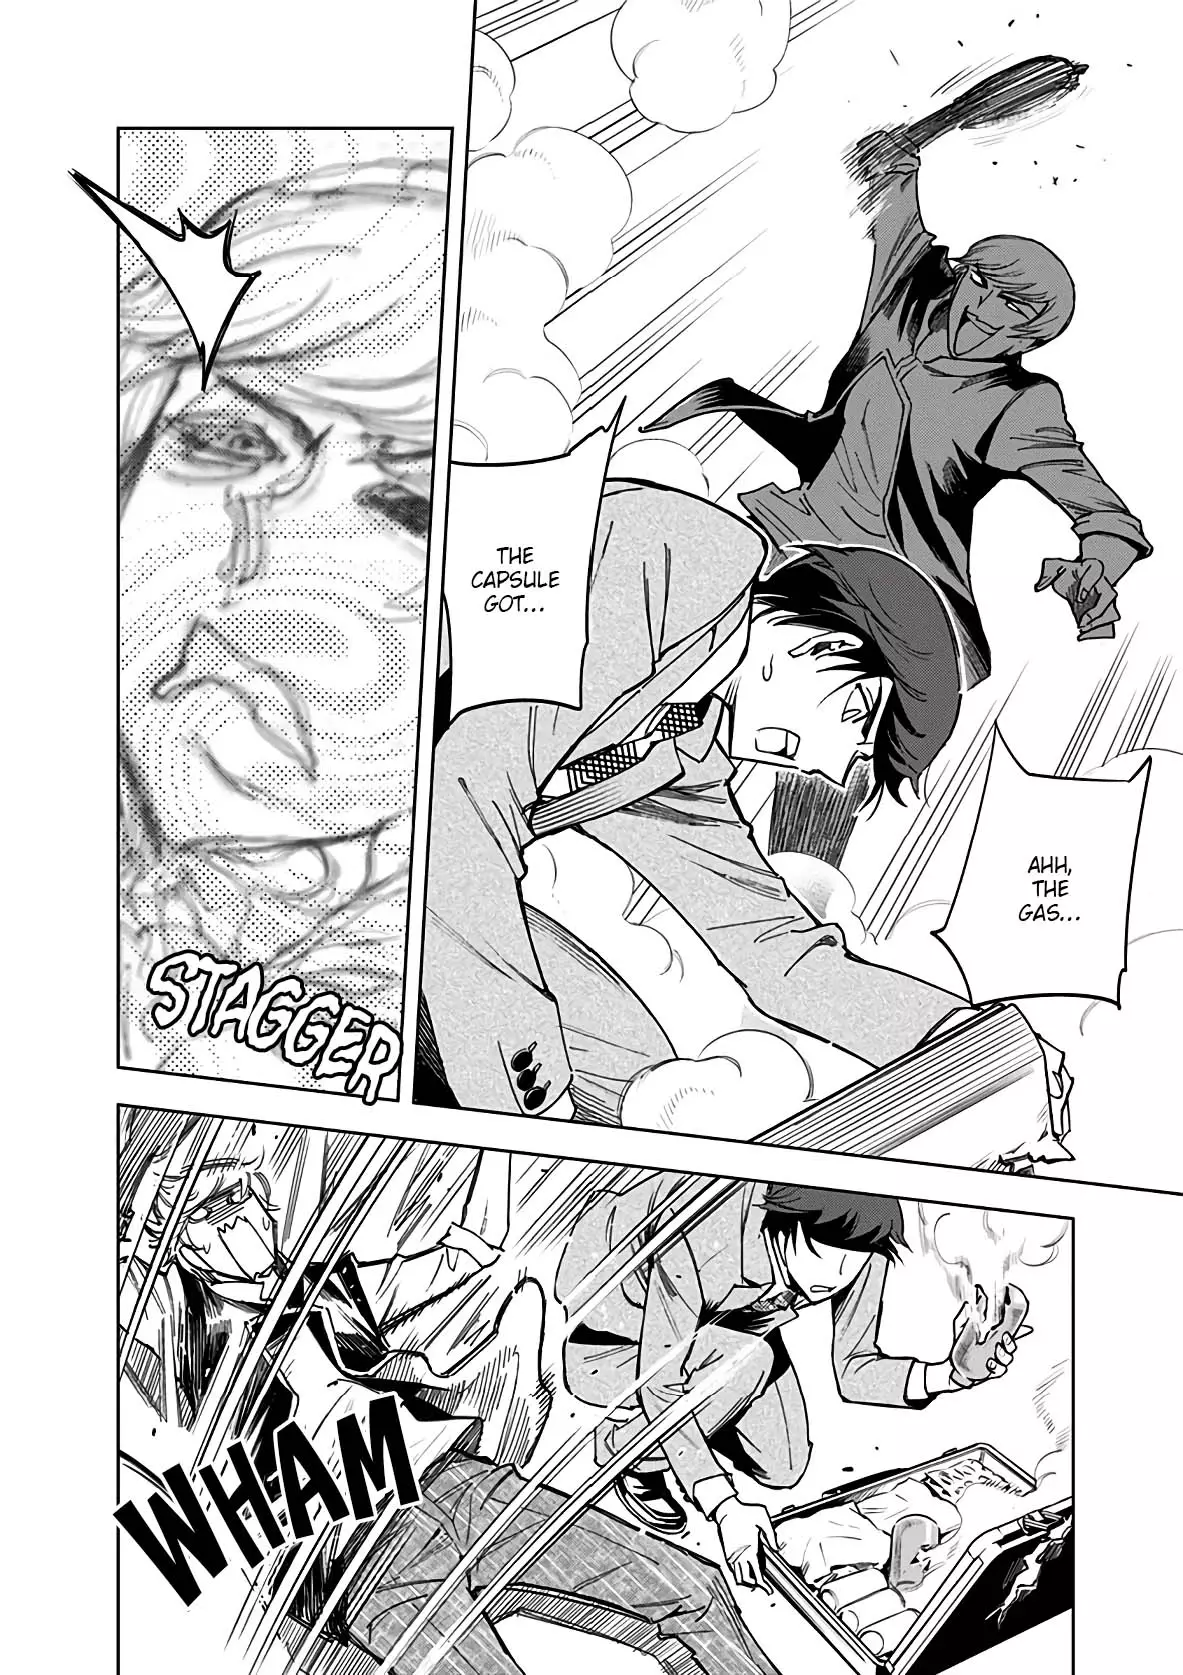 Kiruru Kill Me - 19 page 14